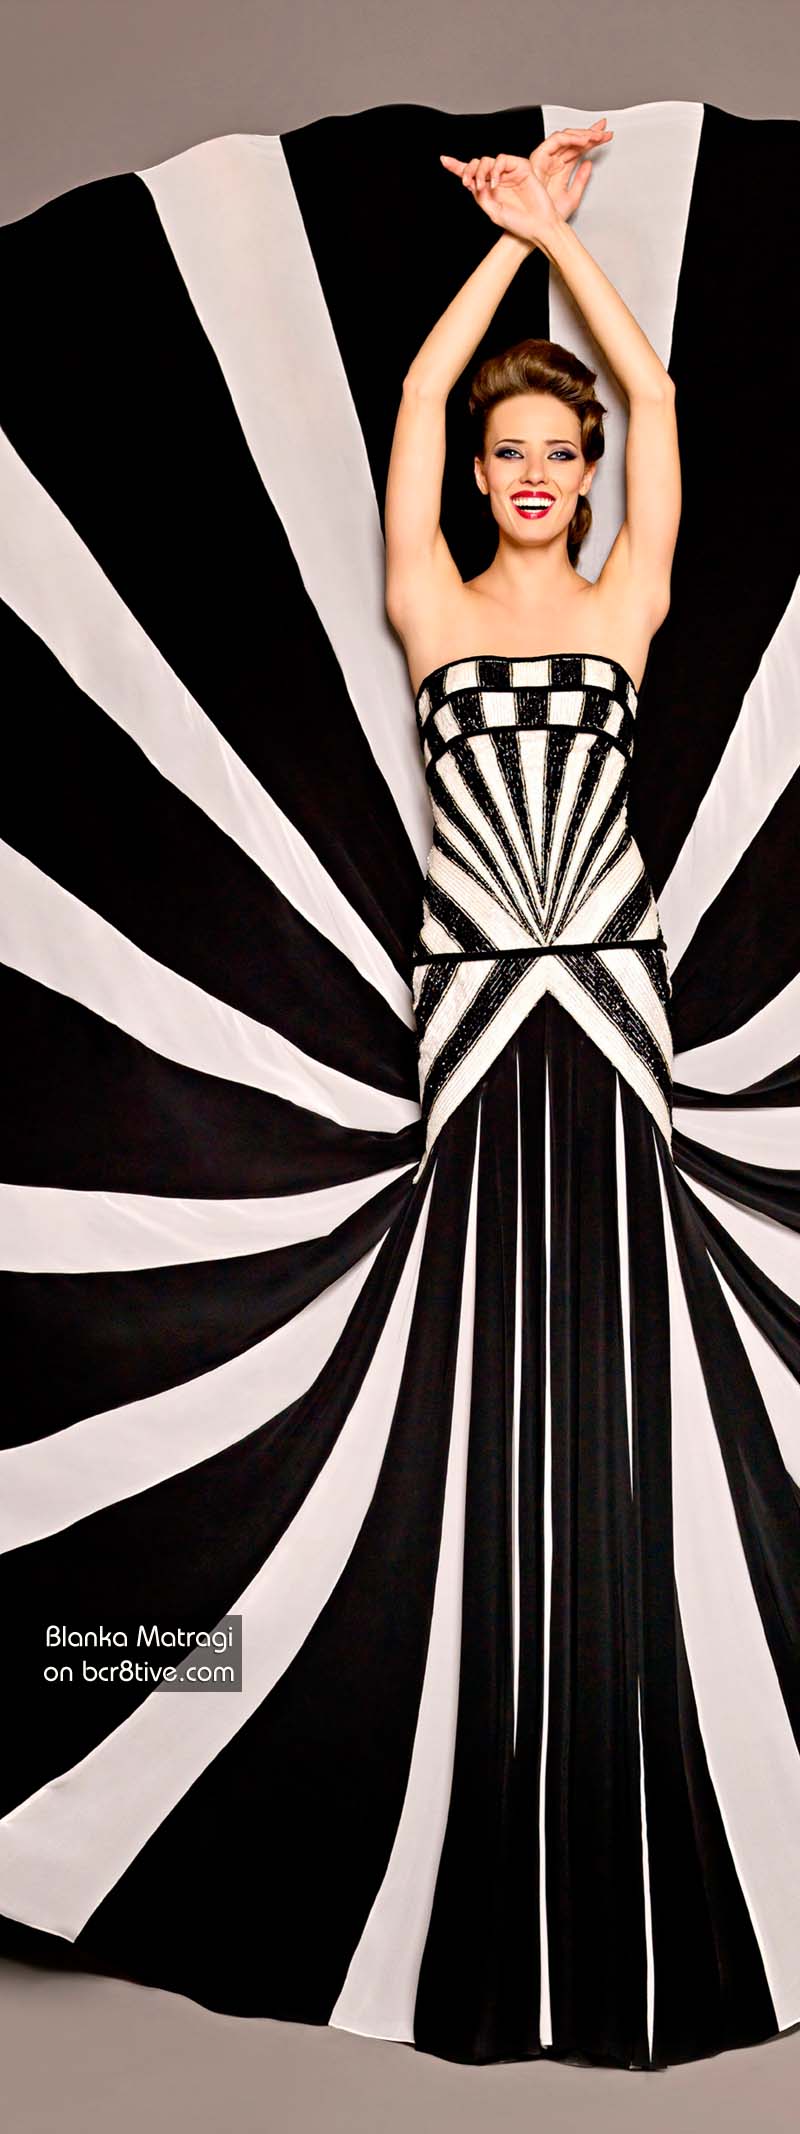 The Versatile Talents of Artisan Blanka Matragi » Blanka Matragi 30th Anniversary Couture Collection 